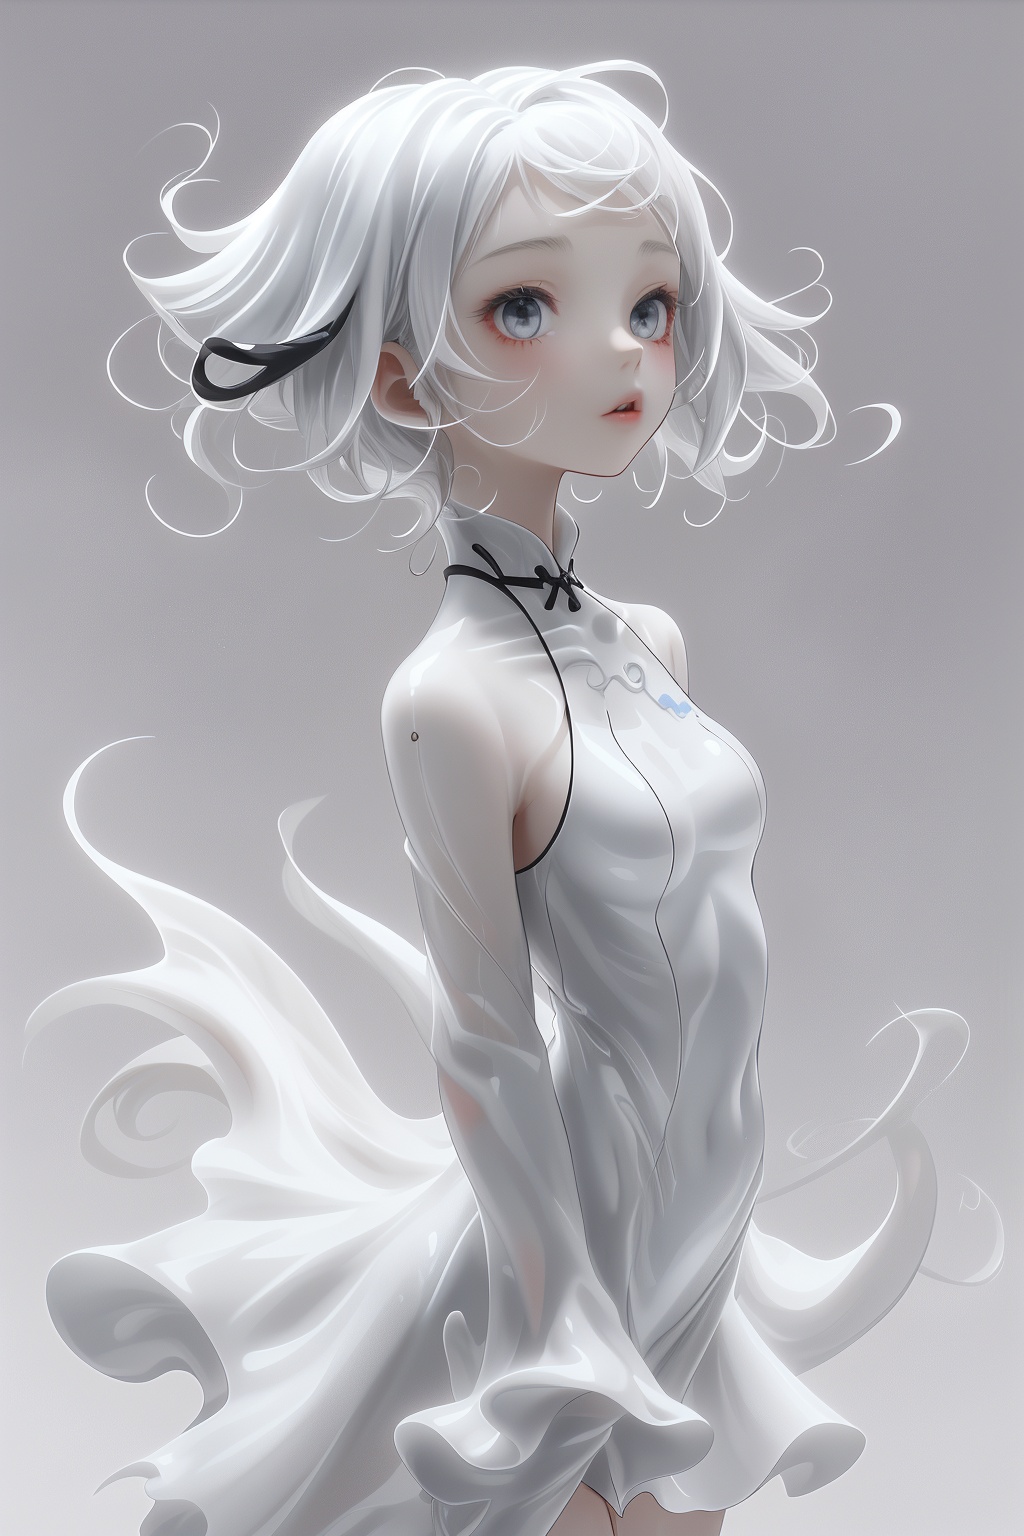 ananqc,a girl with white hair,white dress,long black hair,